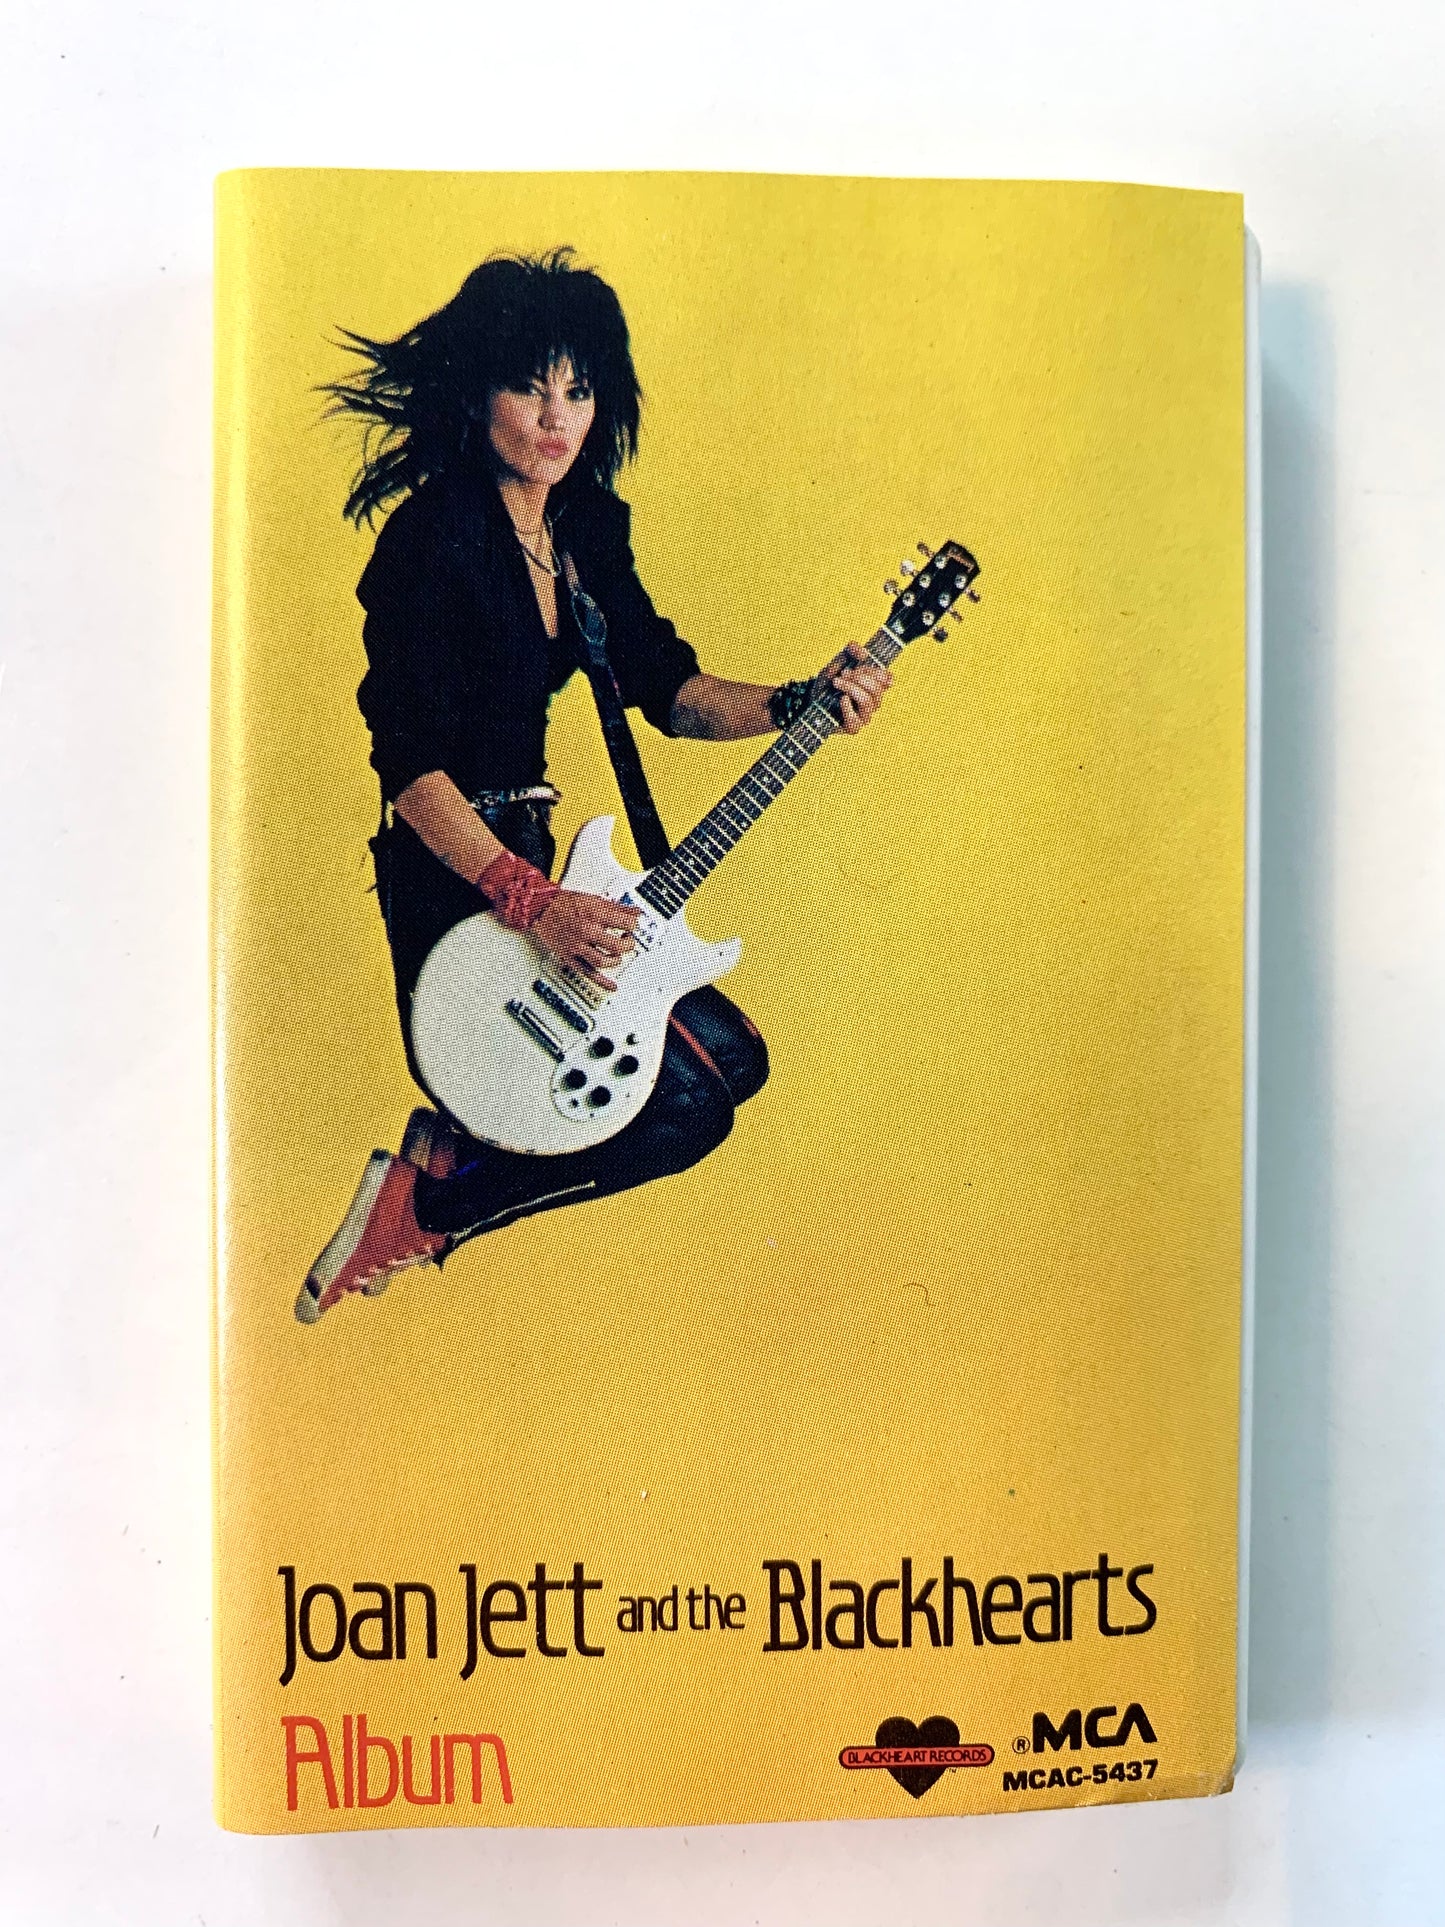 Joan Jett and the Blackhearts, Album